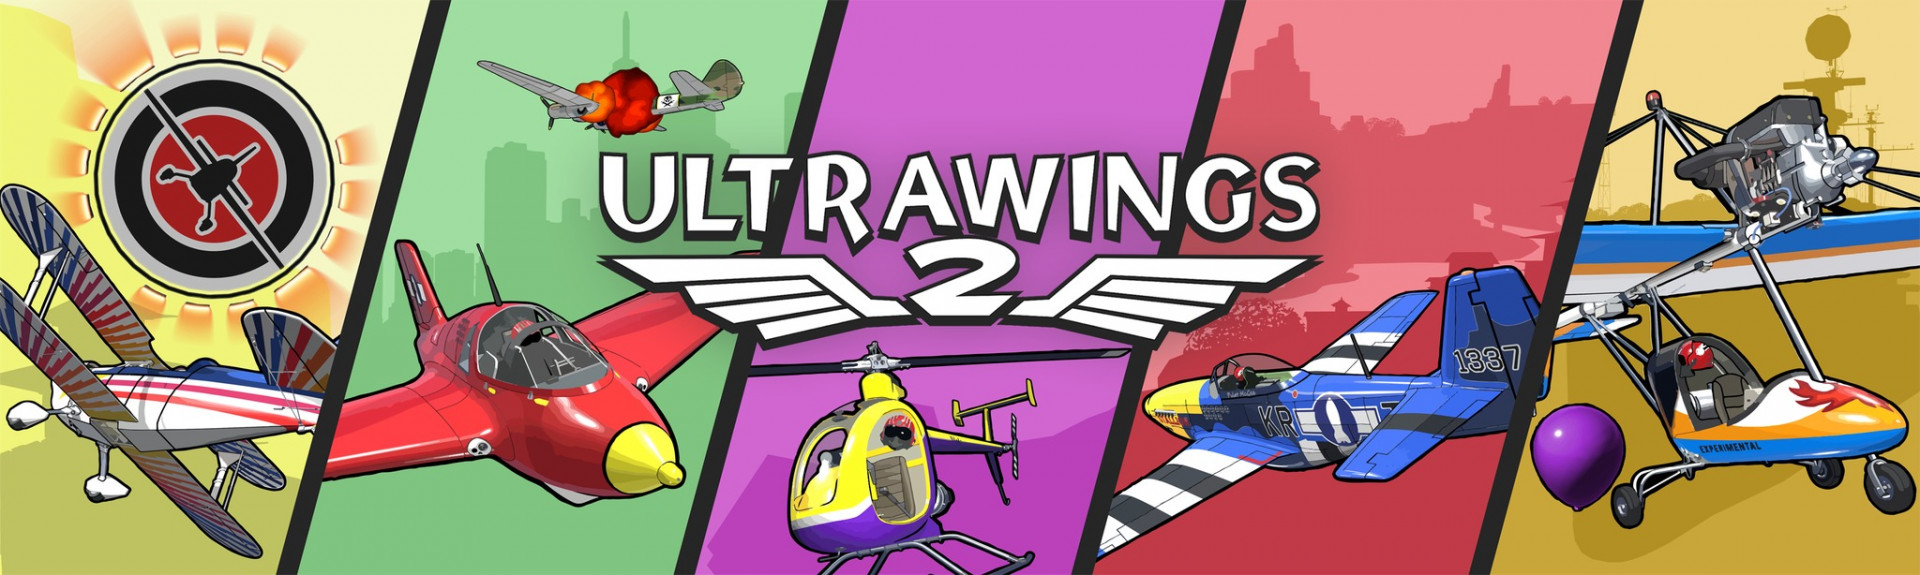 Ultrawings 2: ANÁLISIS